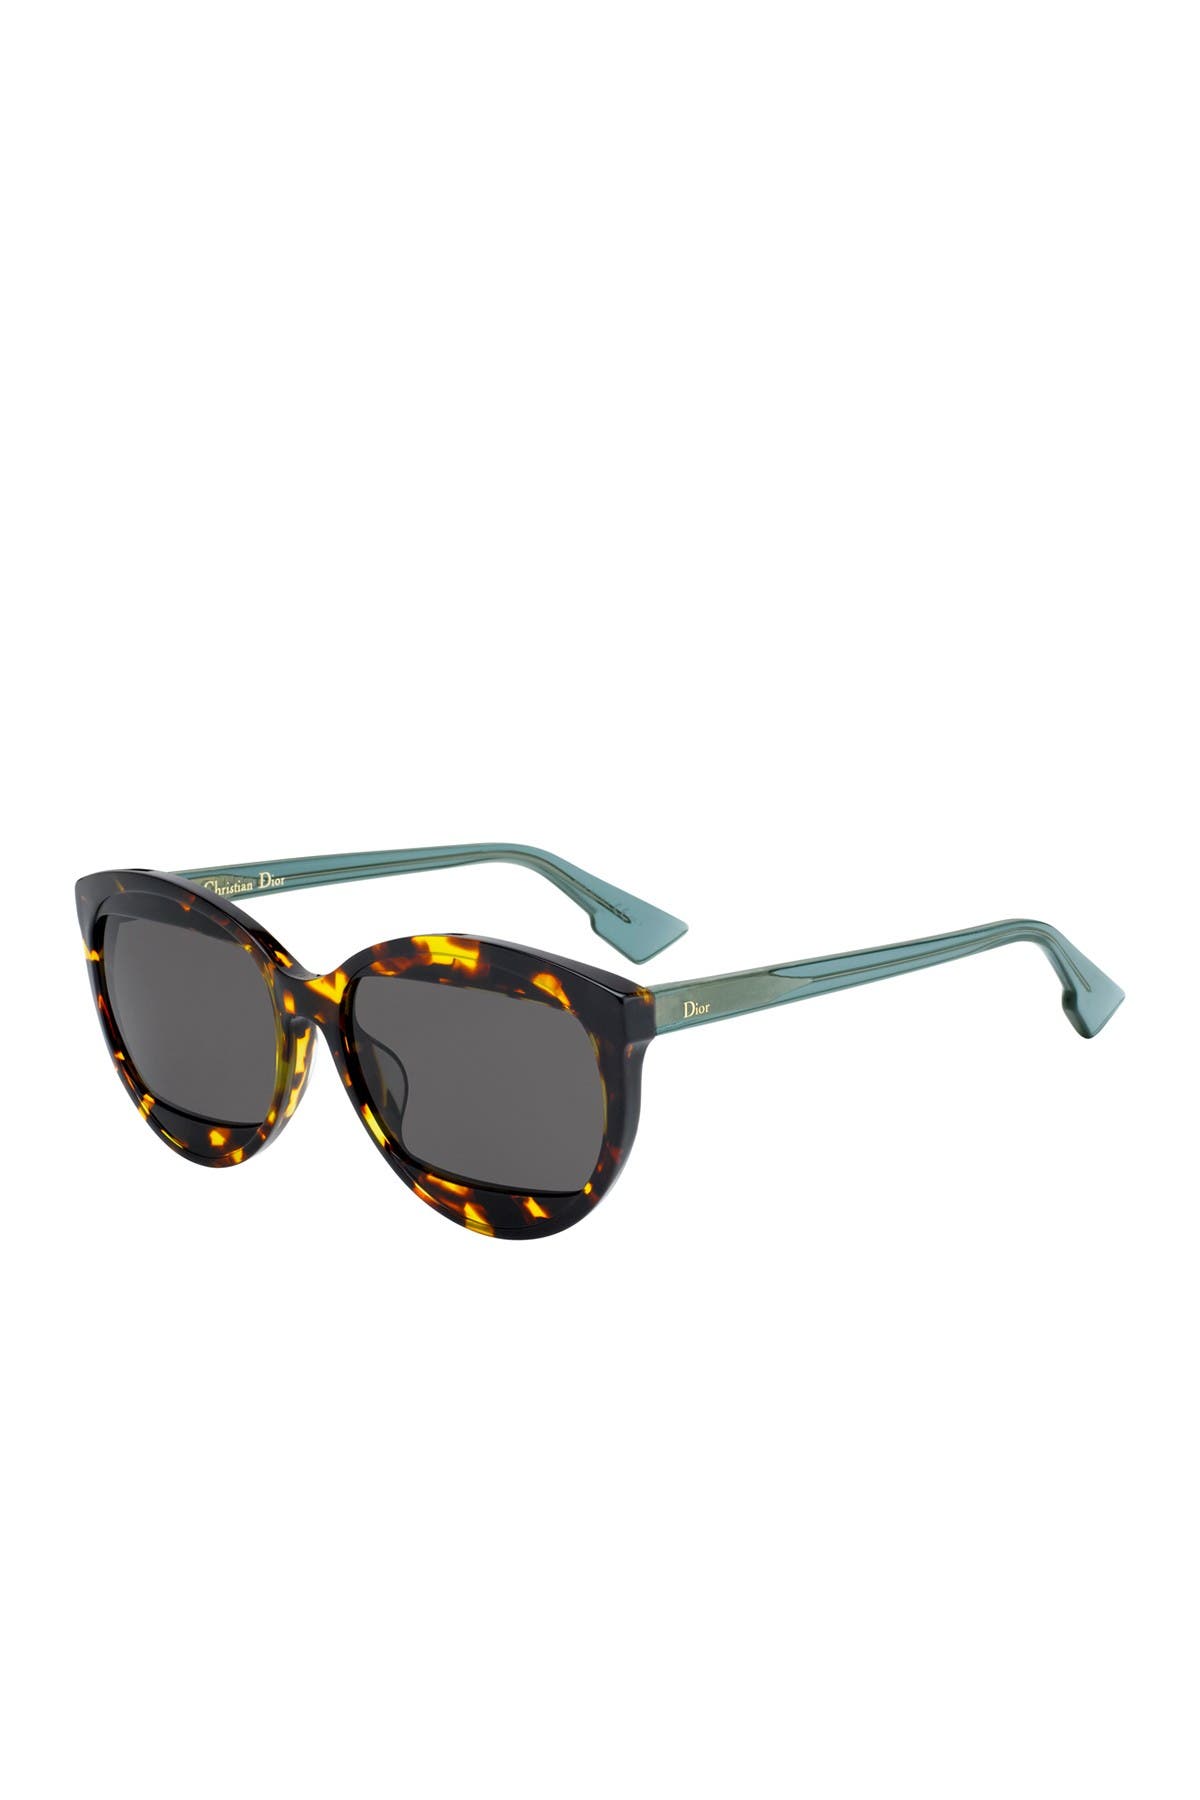 dior mania 2 sunglasses